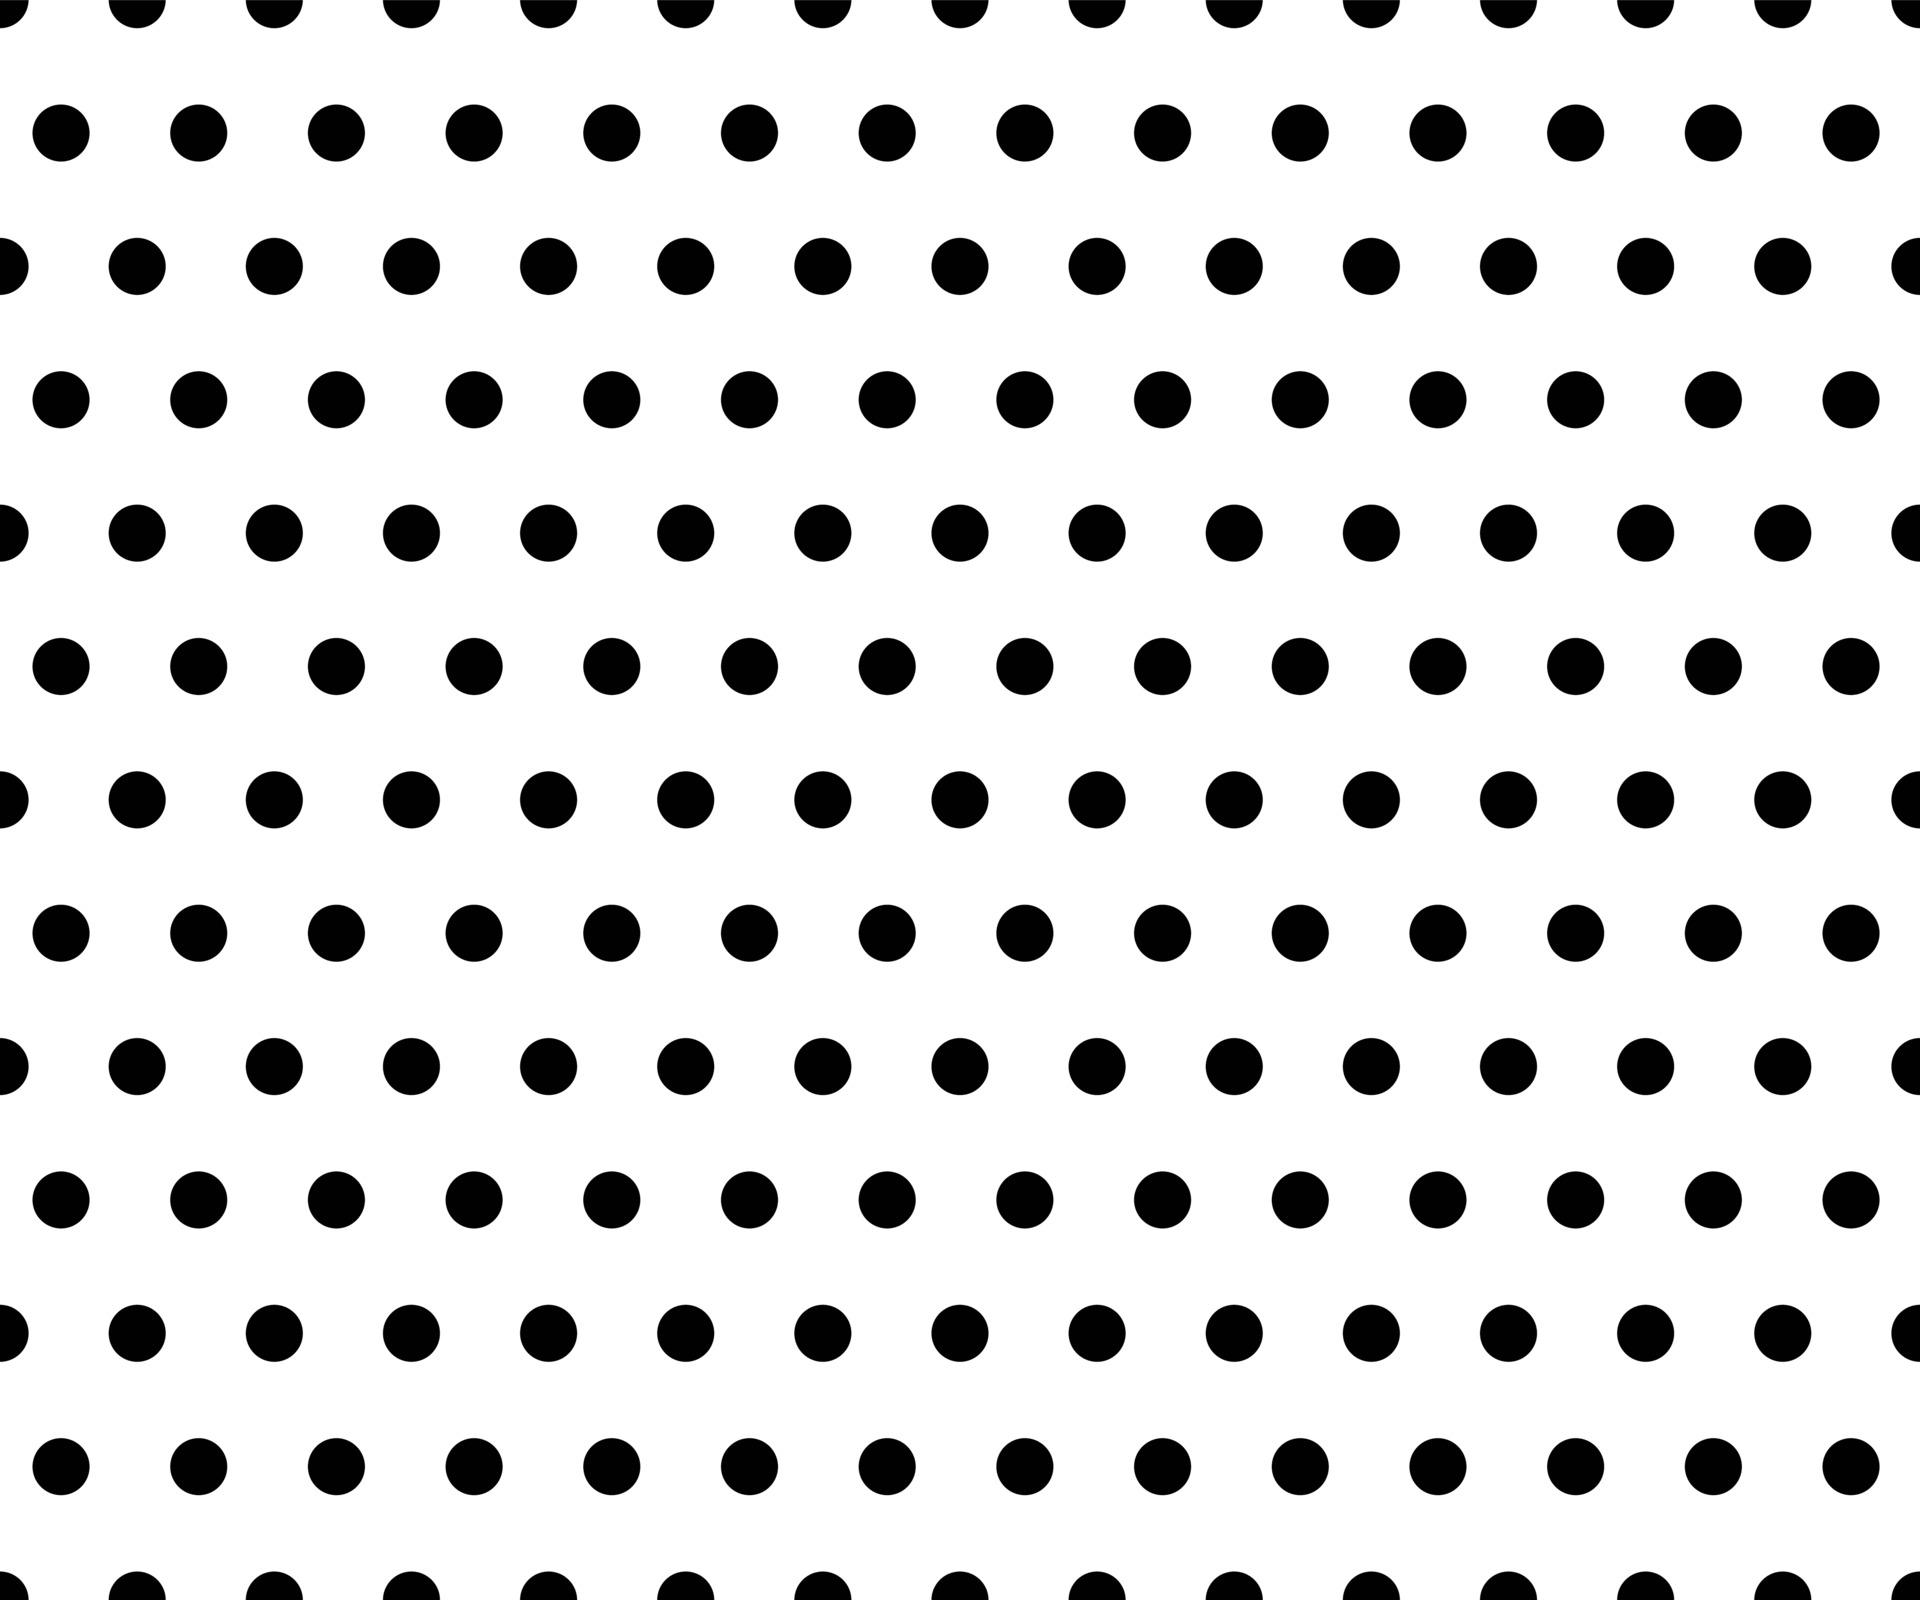 White and Black Polka Dot Nail Art Design - wide 6